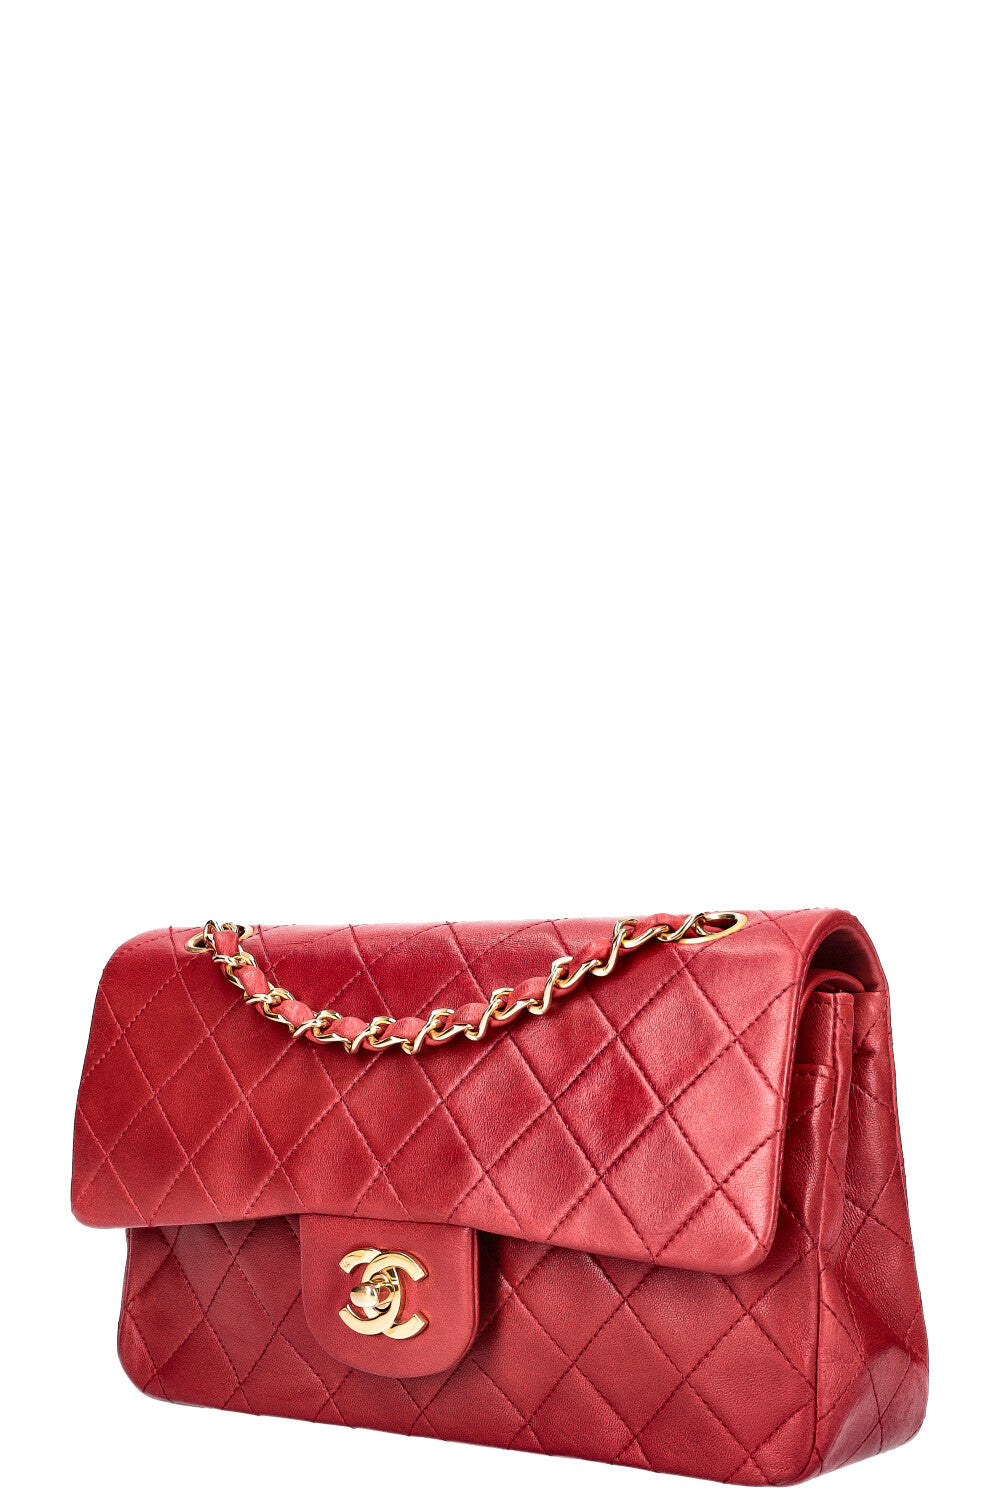 Chanel Sac Rabat In Rouge  Chanel, Shoulder bag, Chanel classic